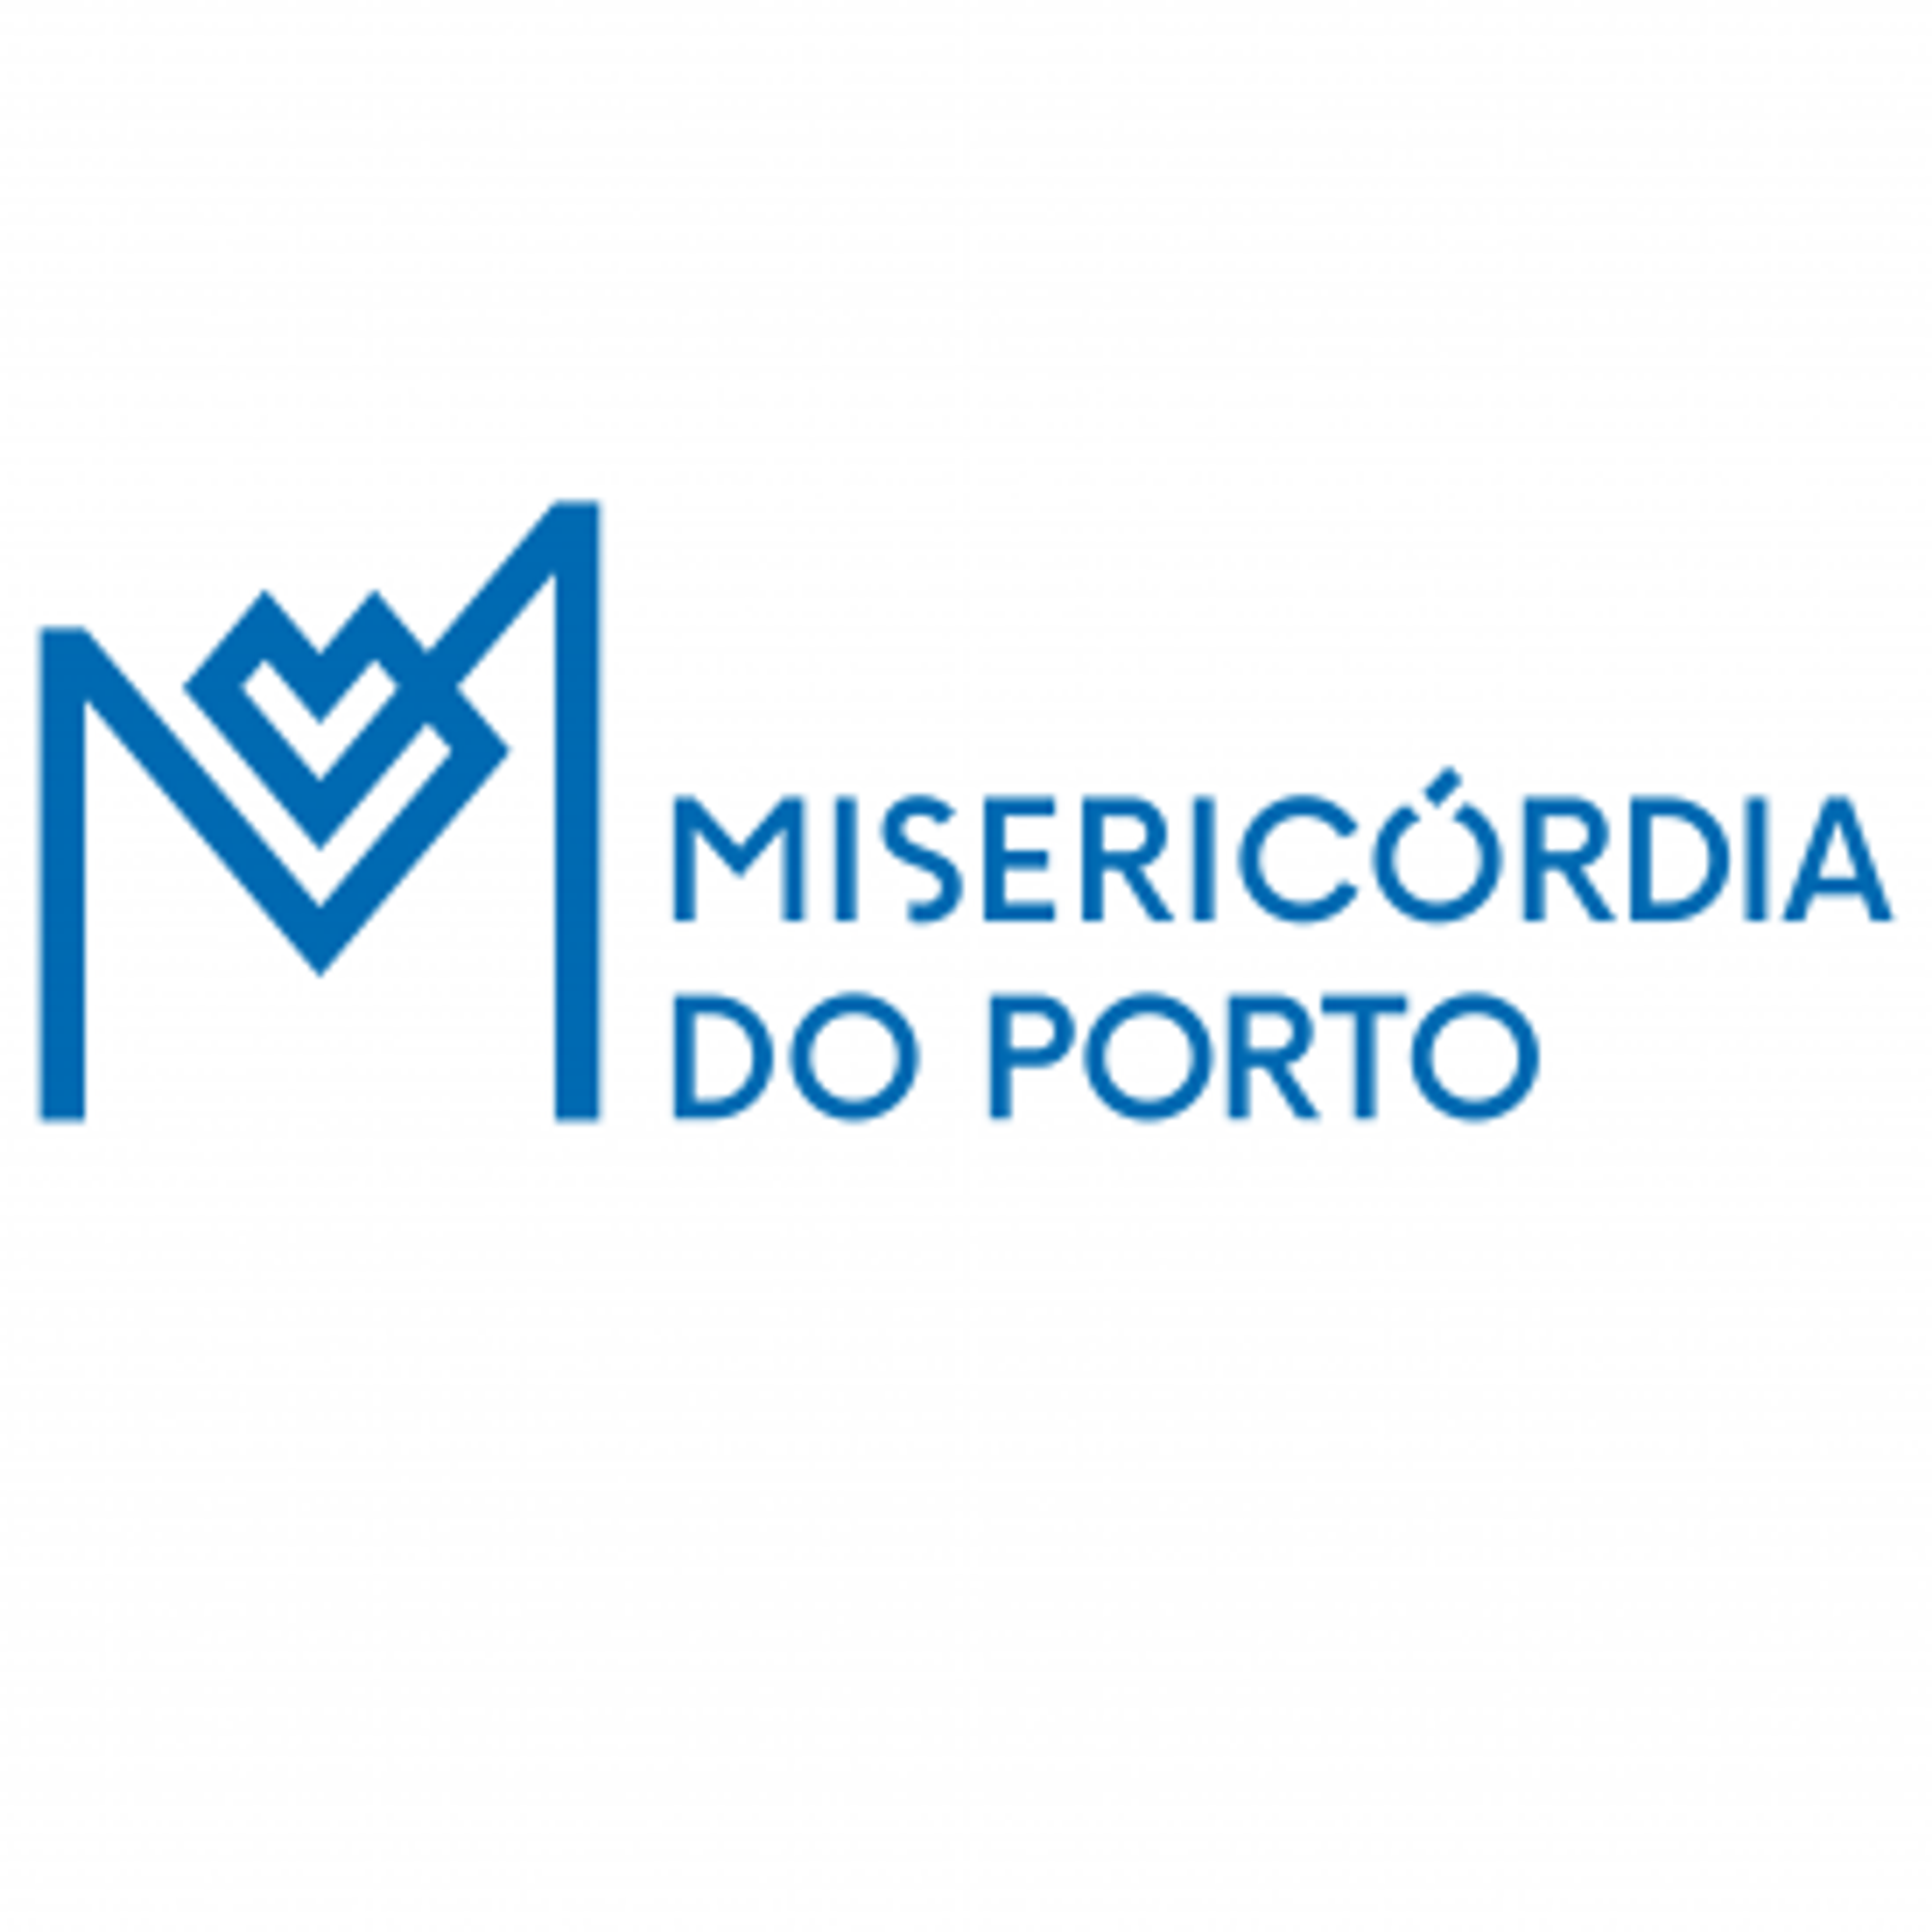 santa-casa-misericordia-porto-logotipo.png